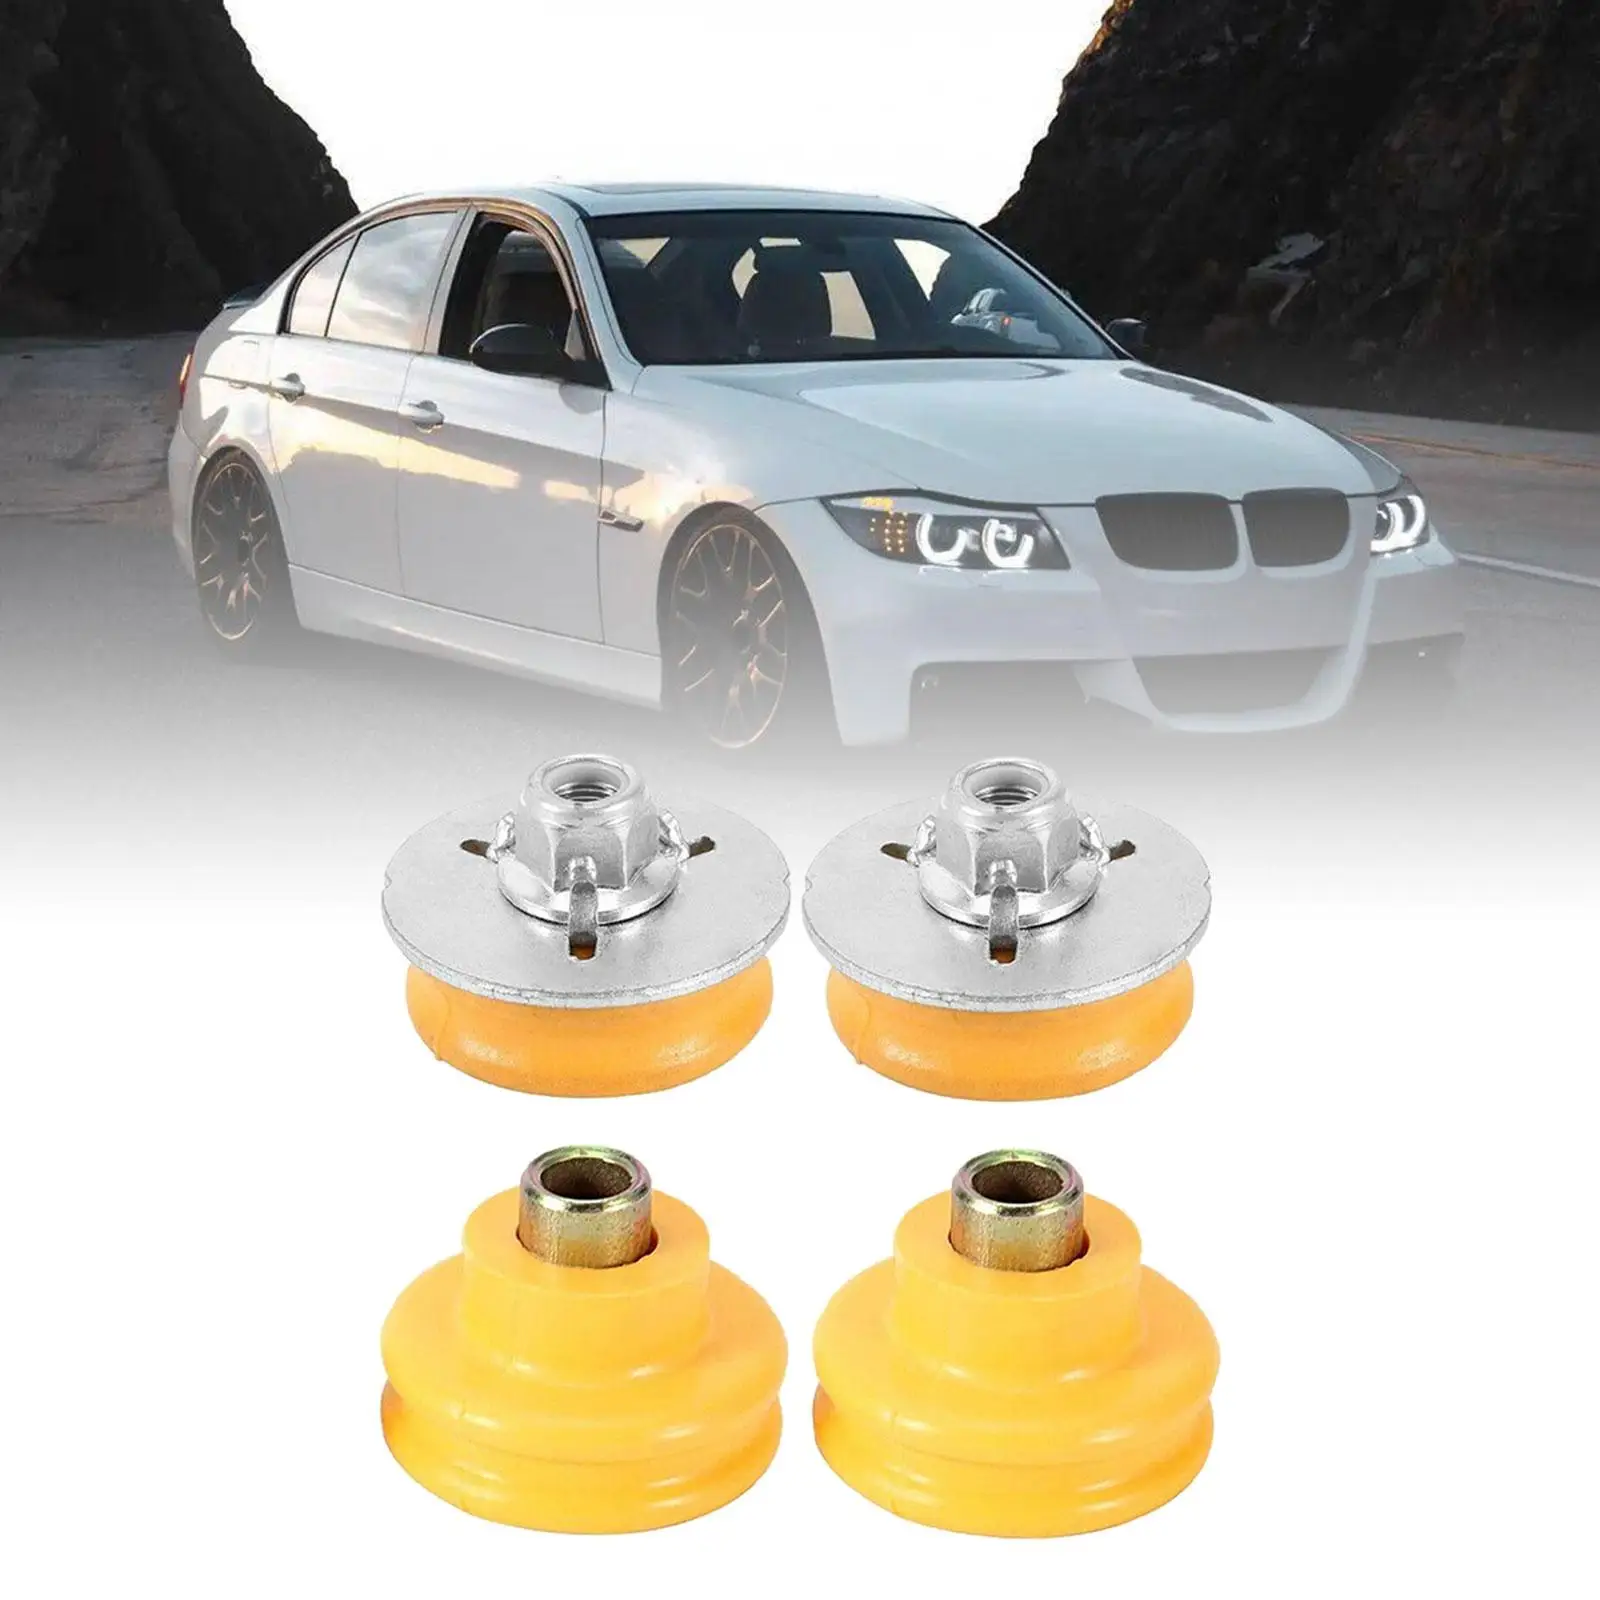 33506771738 Durable Car Accessories Premium Replacement Rear Shock Mounts Set Shock Mounting Kit for BMW E90 E92 E82 E87